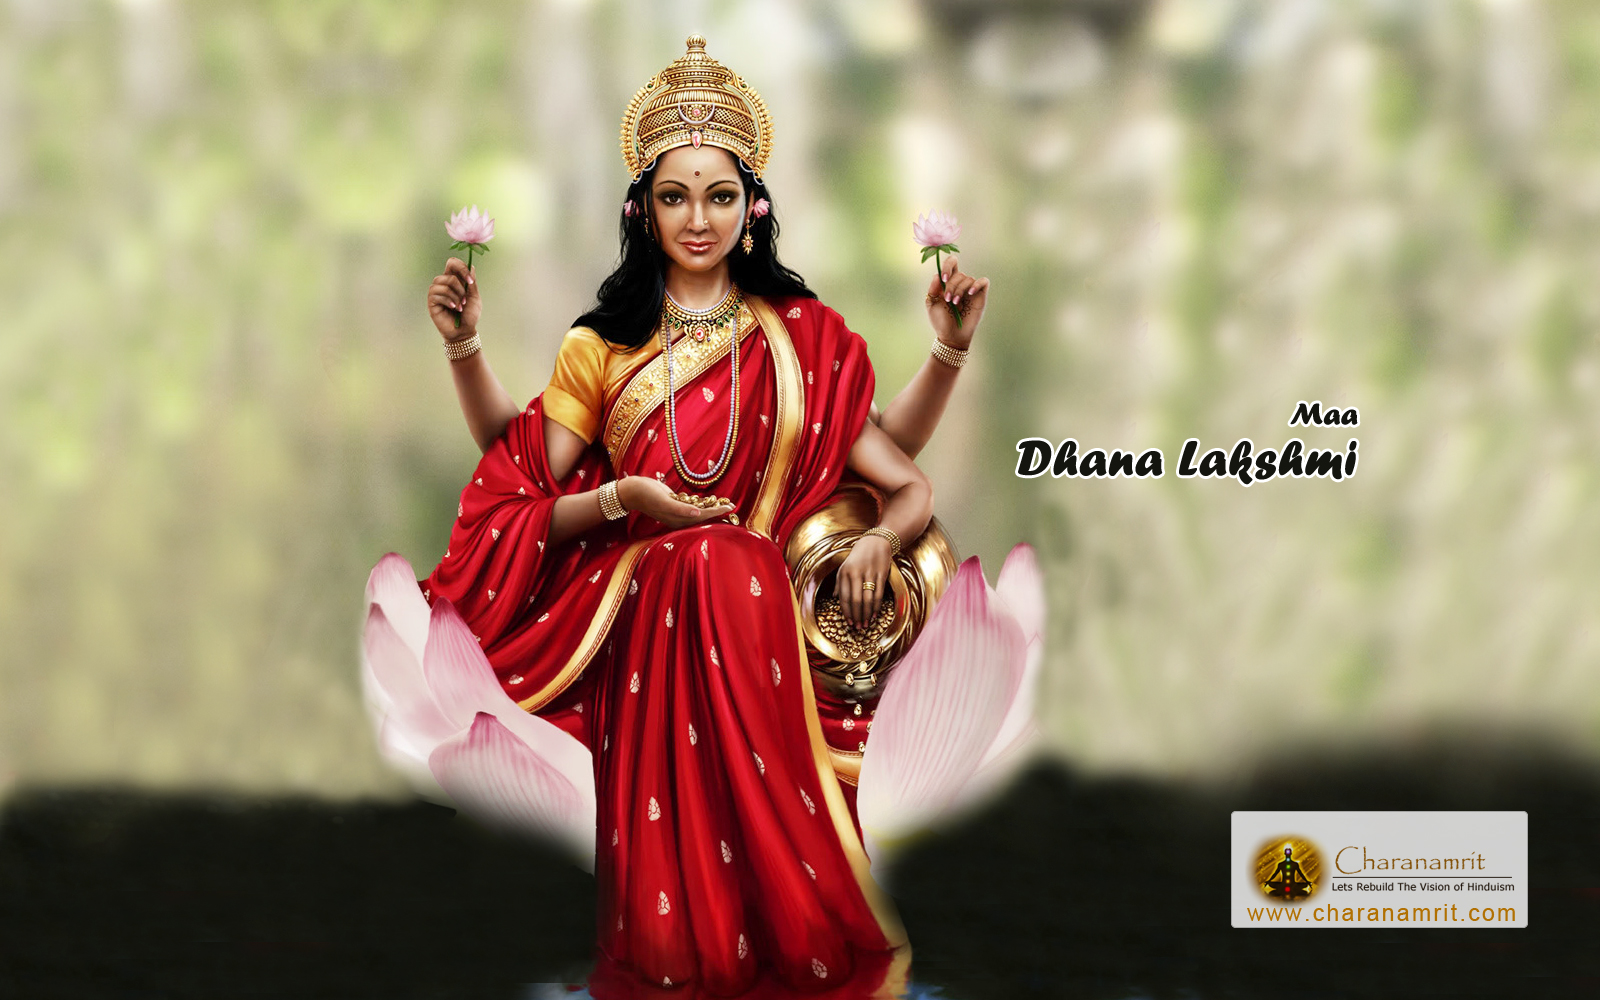 Sri Maa Dhana Lakshmi Devi Beautiful Hd Wallpaper For Free